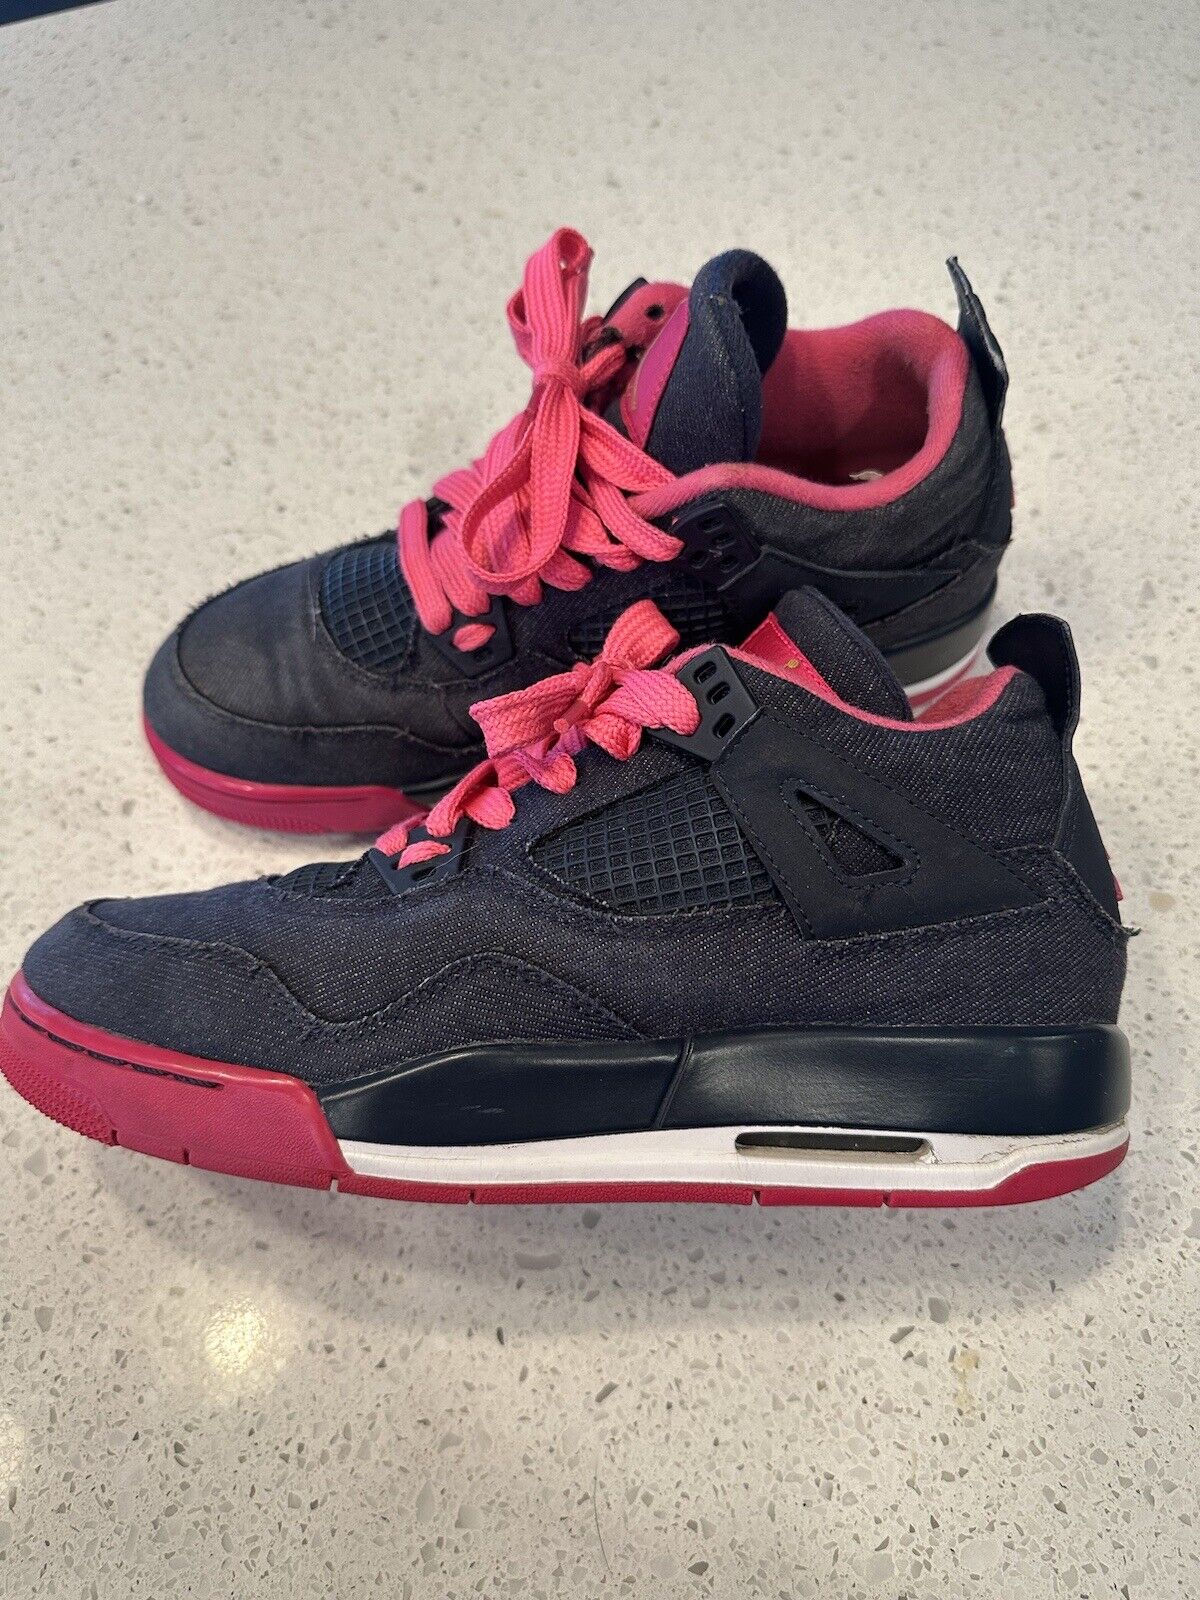 Nike Air Jordan 4 Retro GG 487724-408 Denim Obsidian Pink Youth Sz 